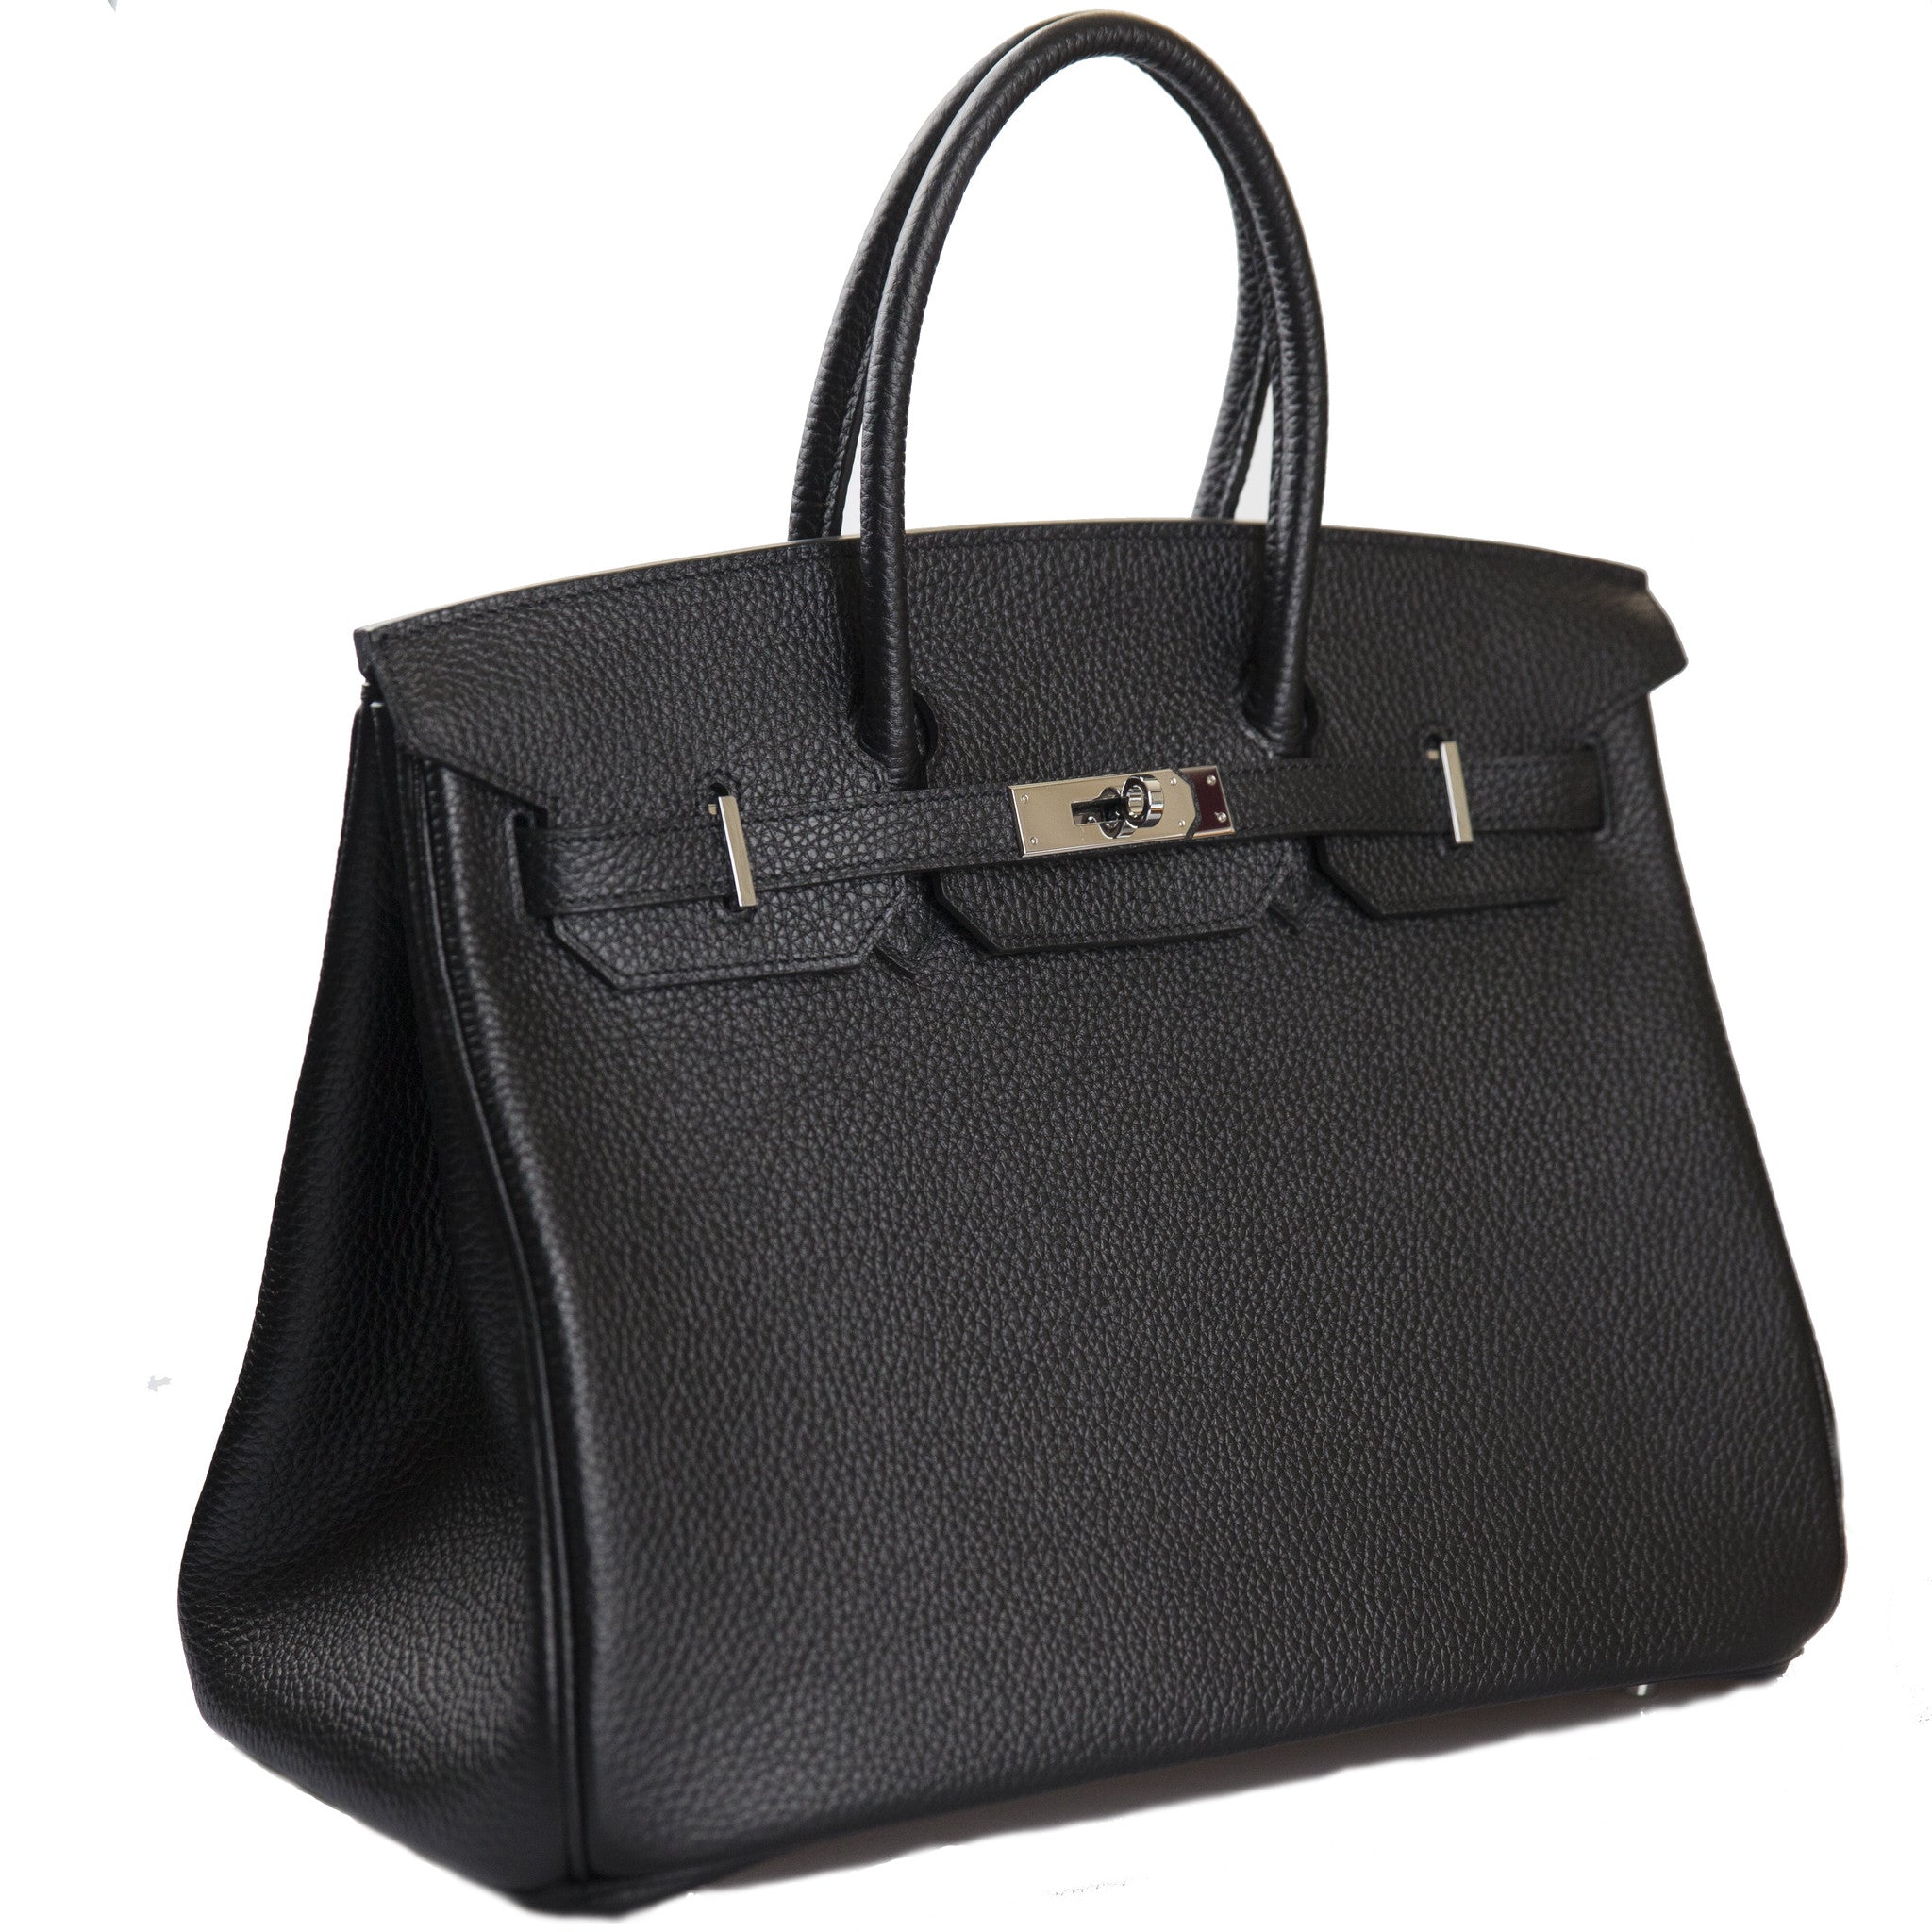 Hermes Bag Styles | IQS Executive